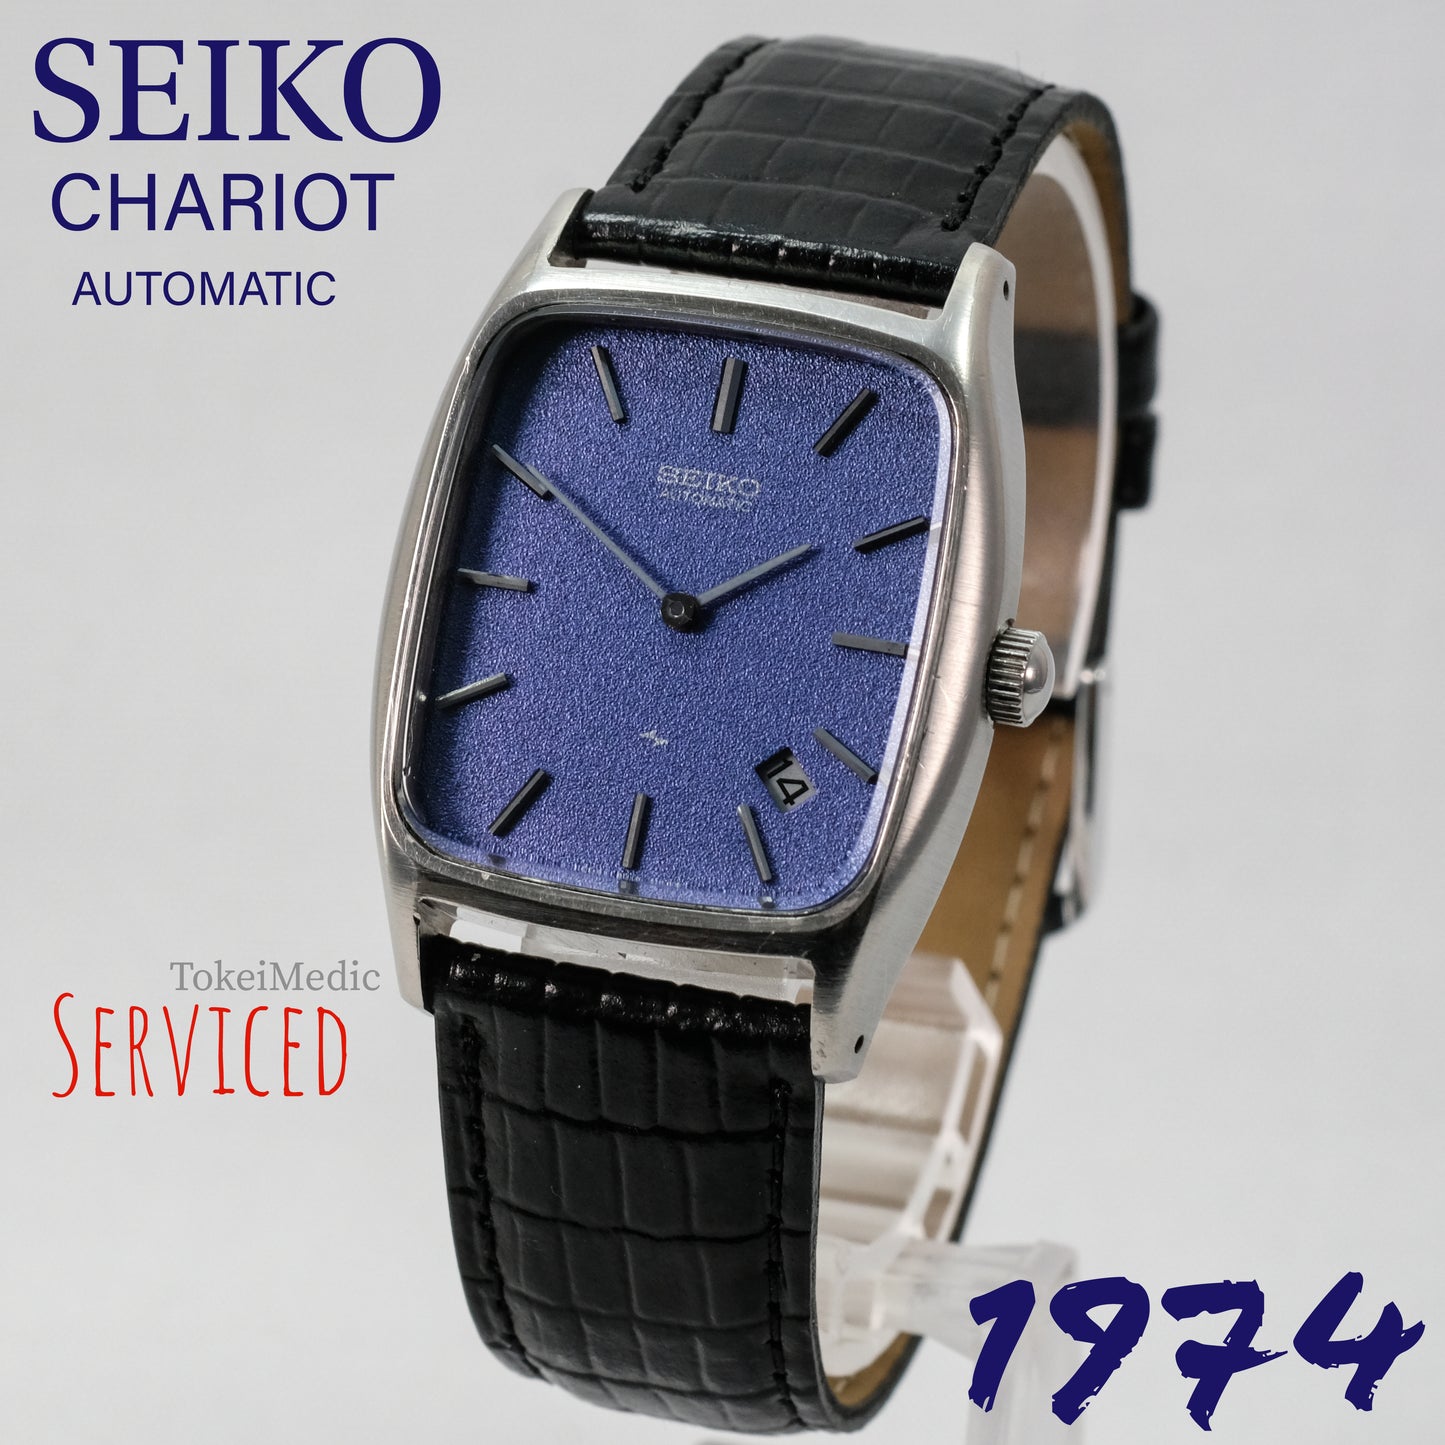 1974 Seiko Chariot Automatic 2418-301A